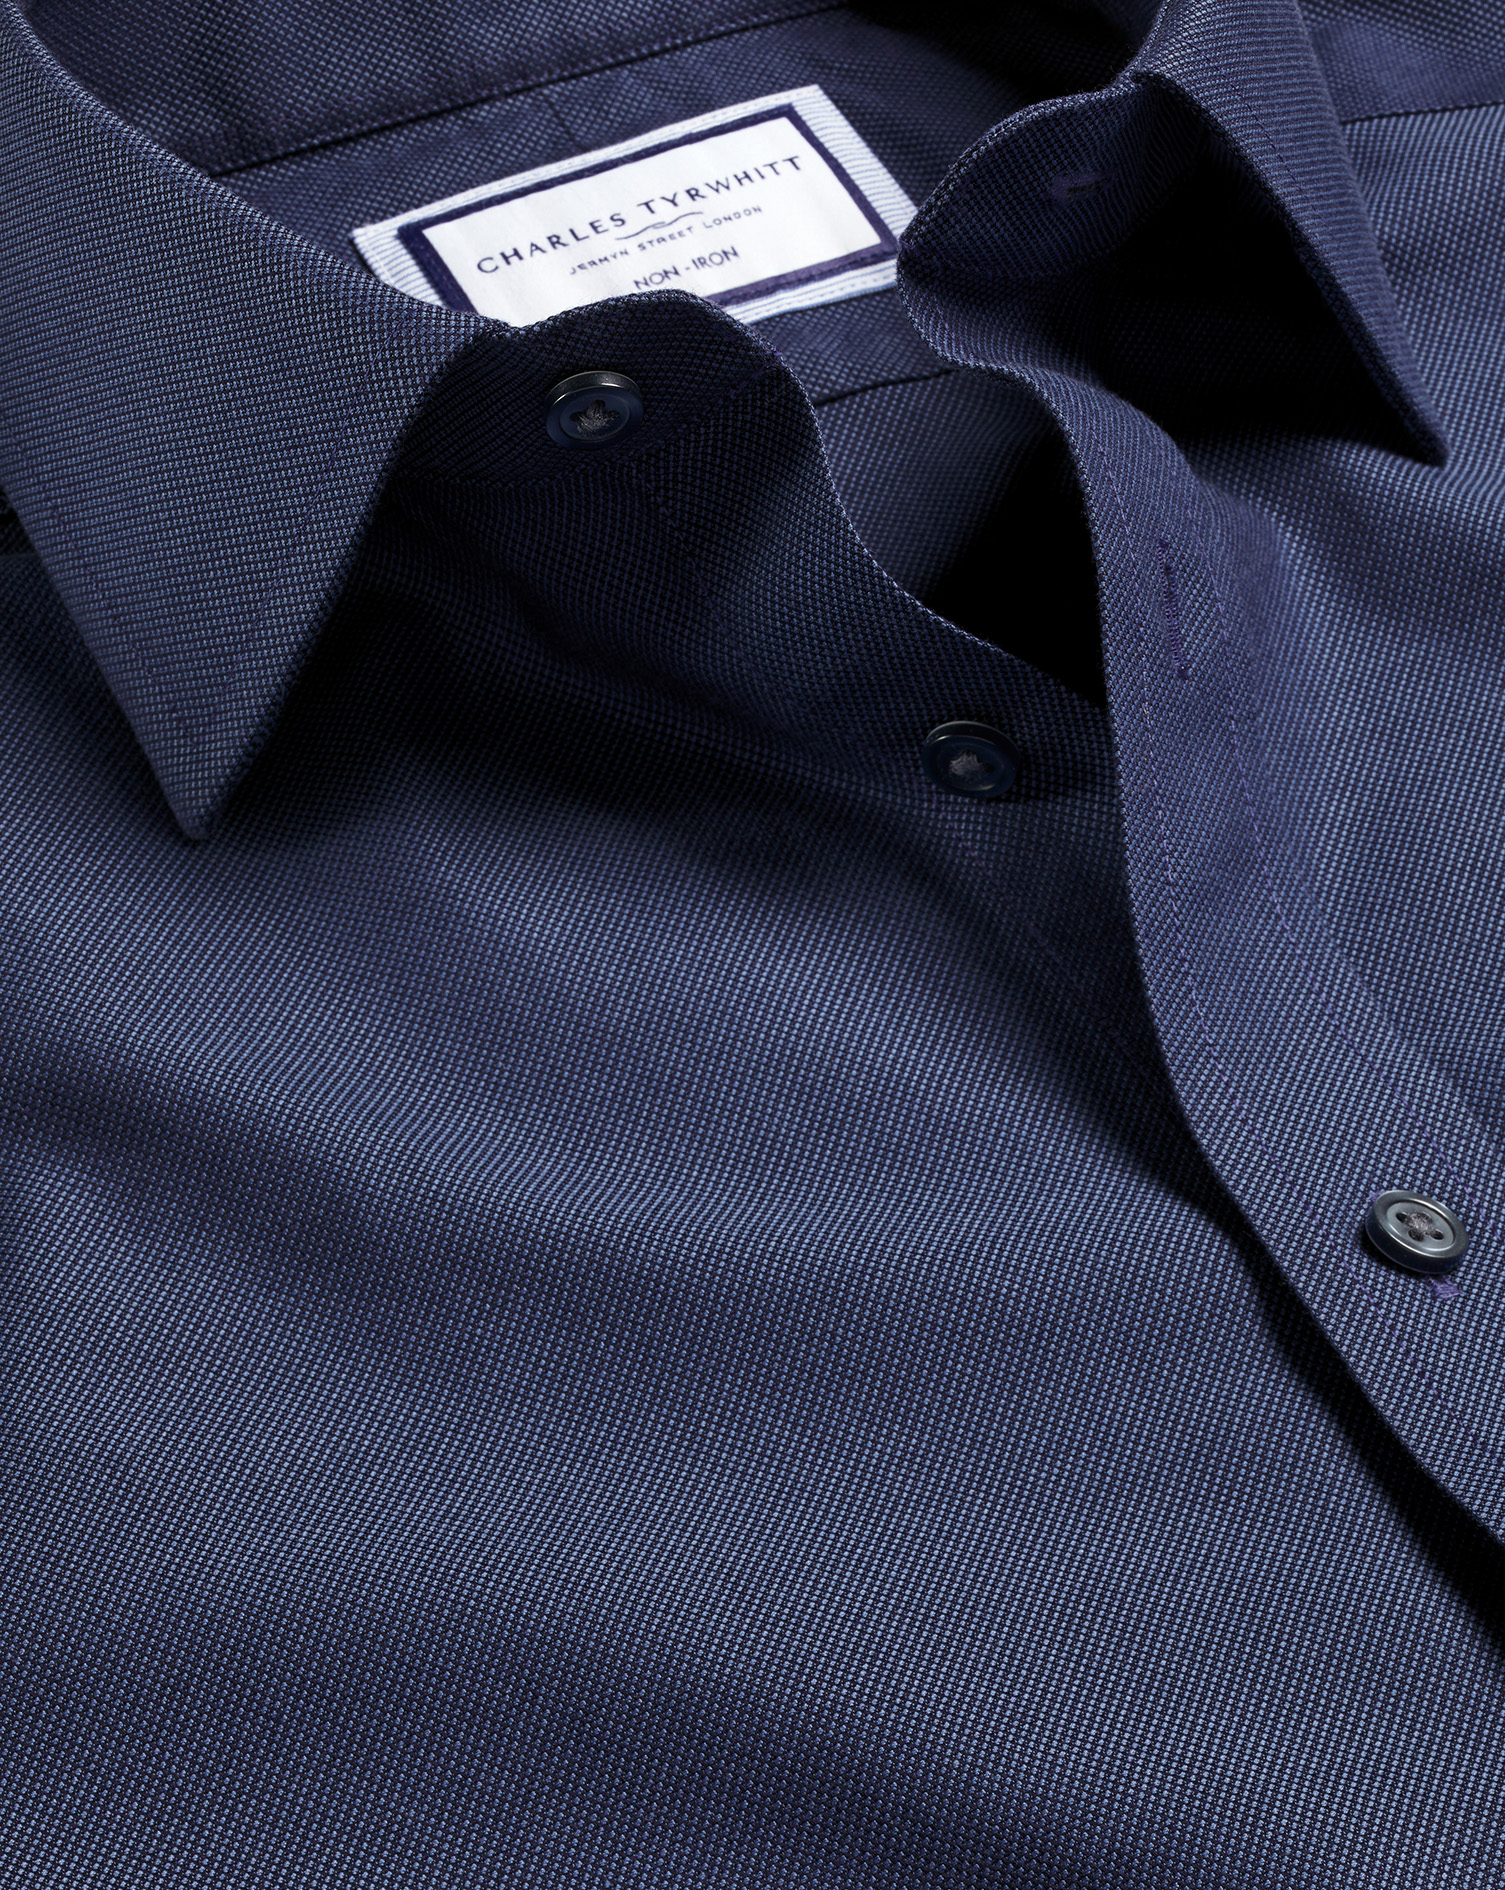 Men's Charles Tyrwhitt Non-Iron Royal Oxford Dress Shirt - French Blue Single Cuff Size 15.5/33 Cott